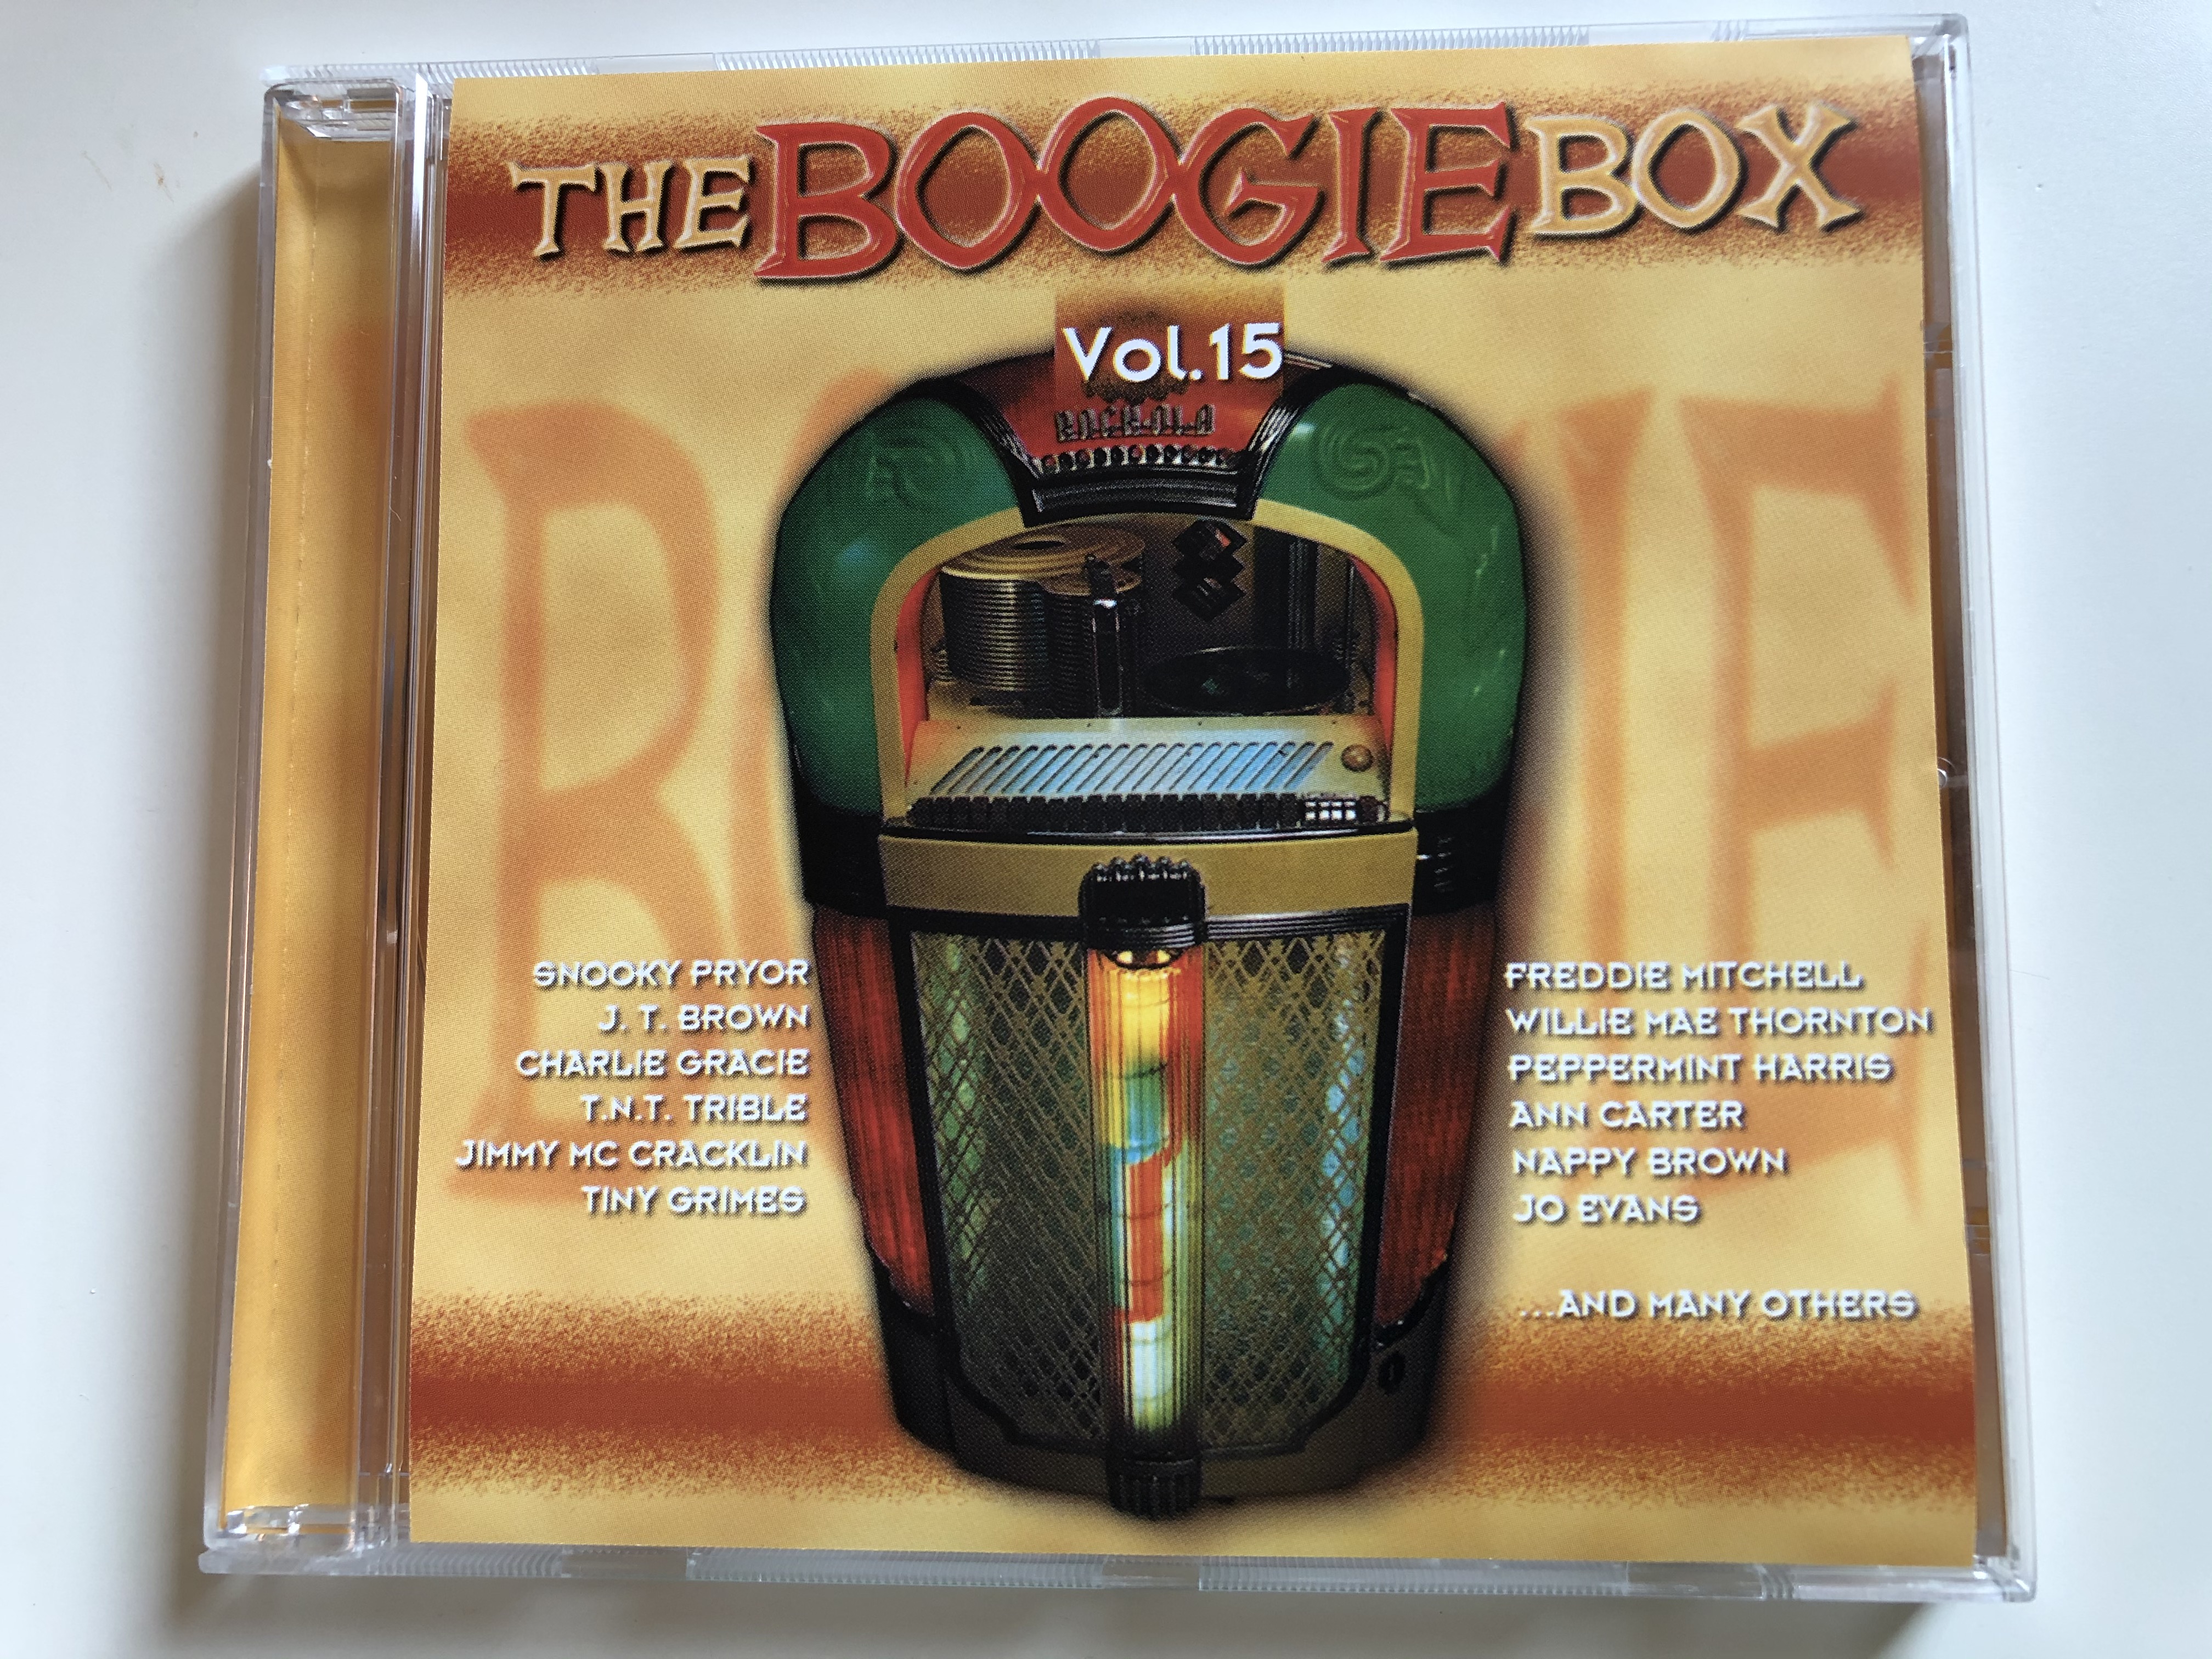 1-the-boogie-box-vol.-15-tim-cz-audio-cd-2001-205550-202-1-.jpg